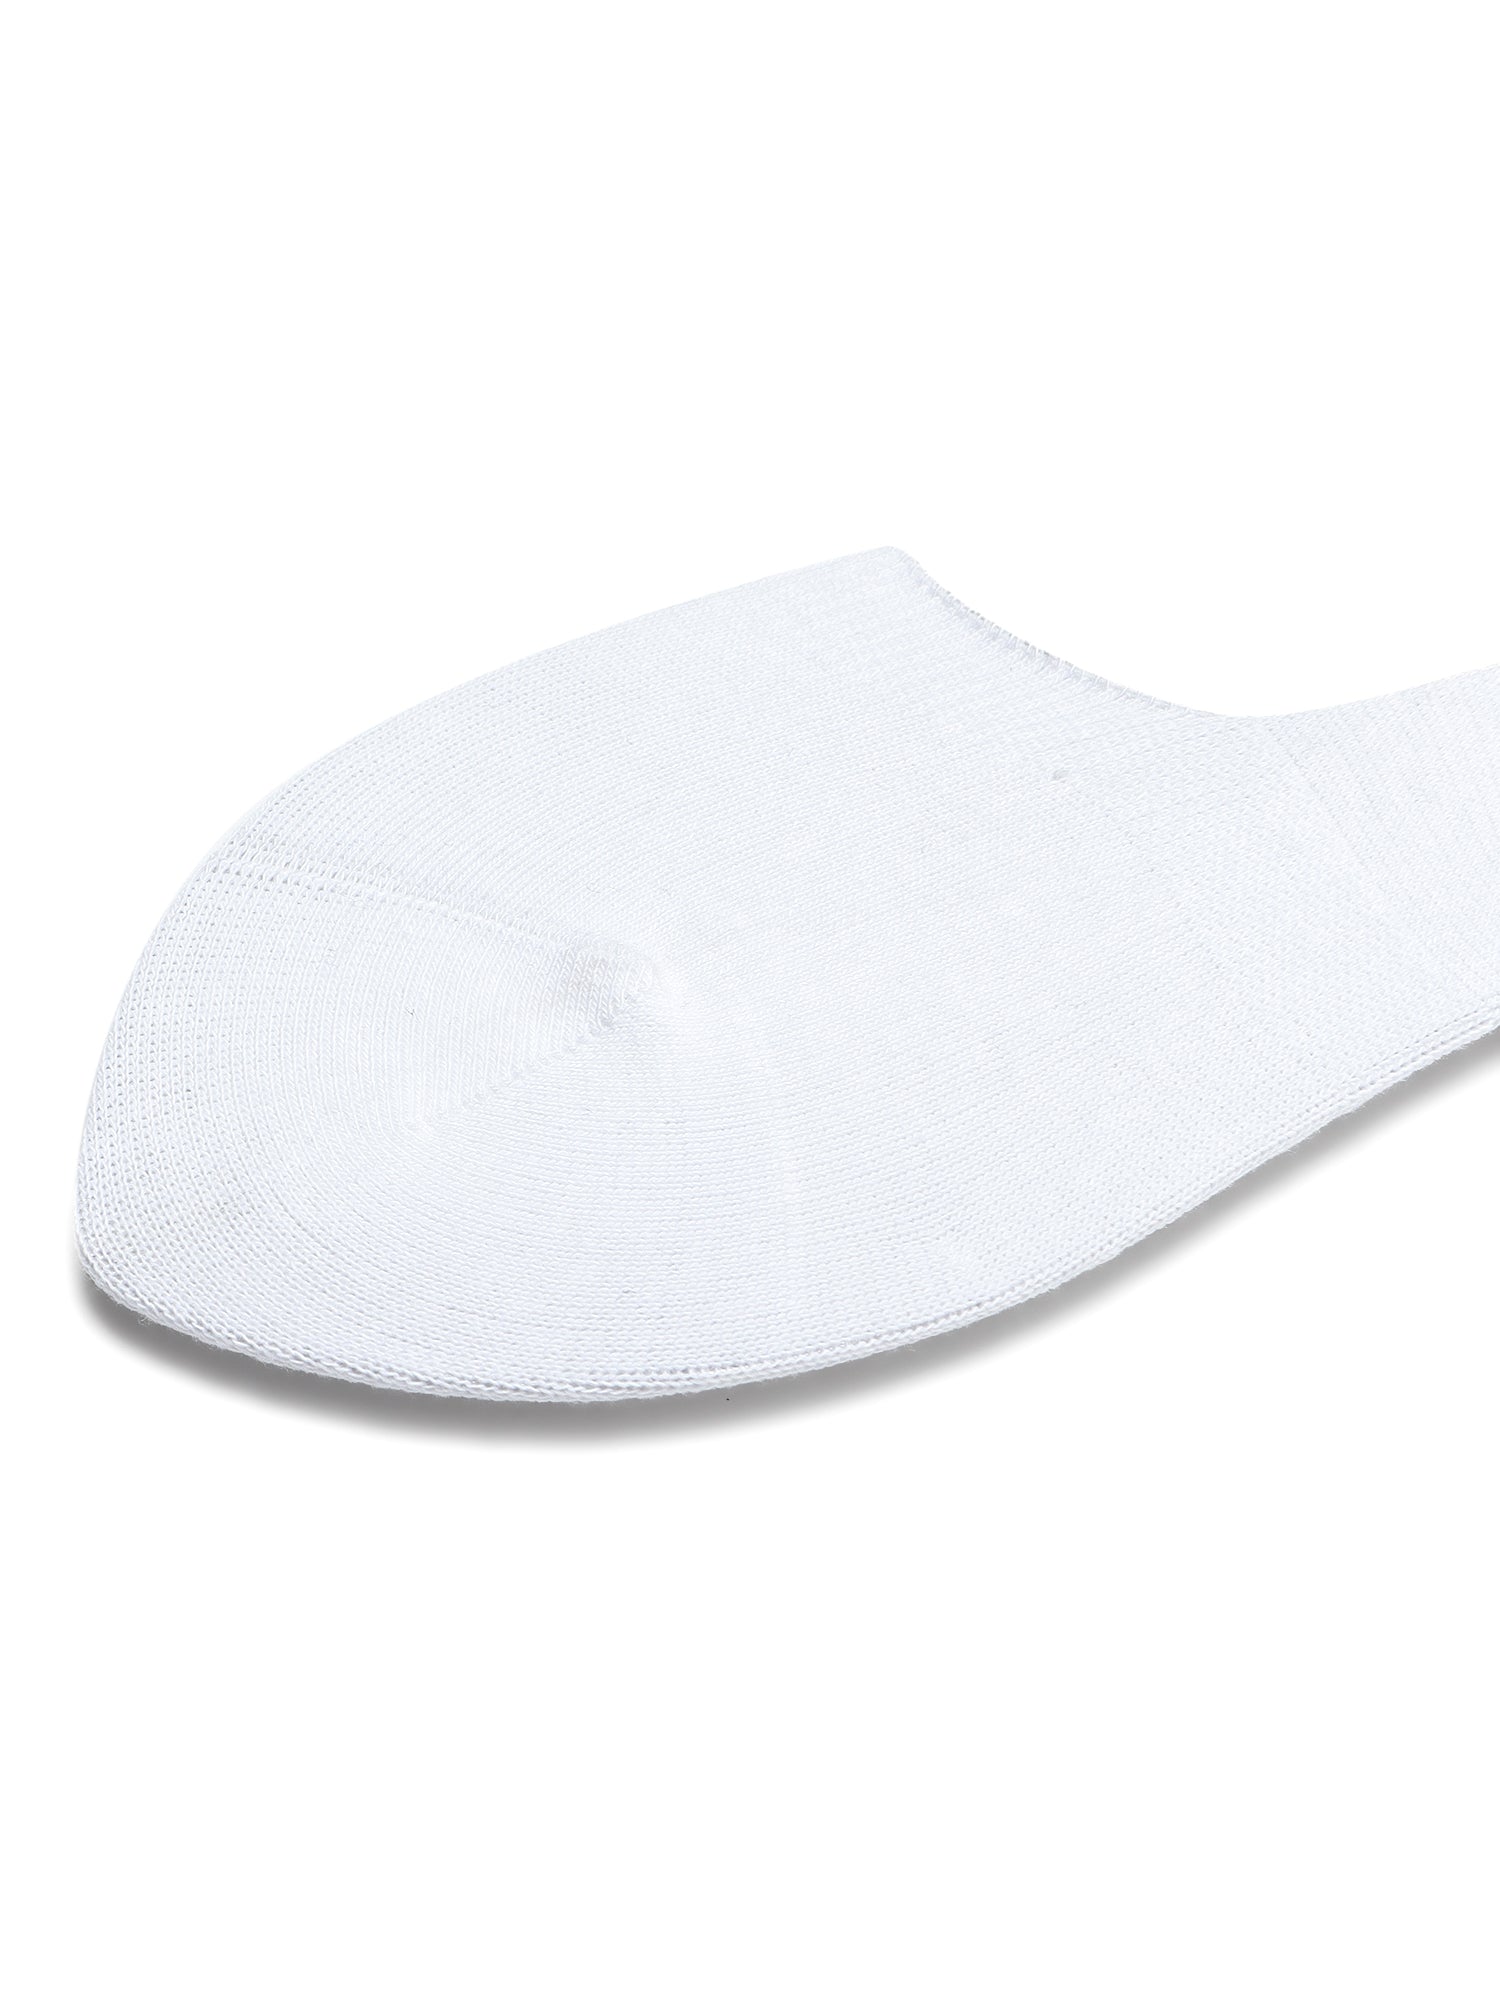 White Solid Non-Slip No Show Socks For Women